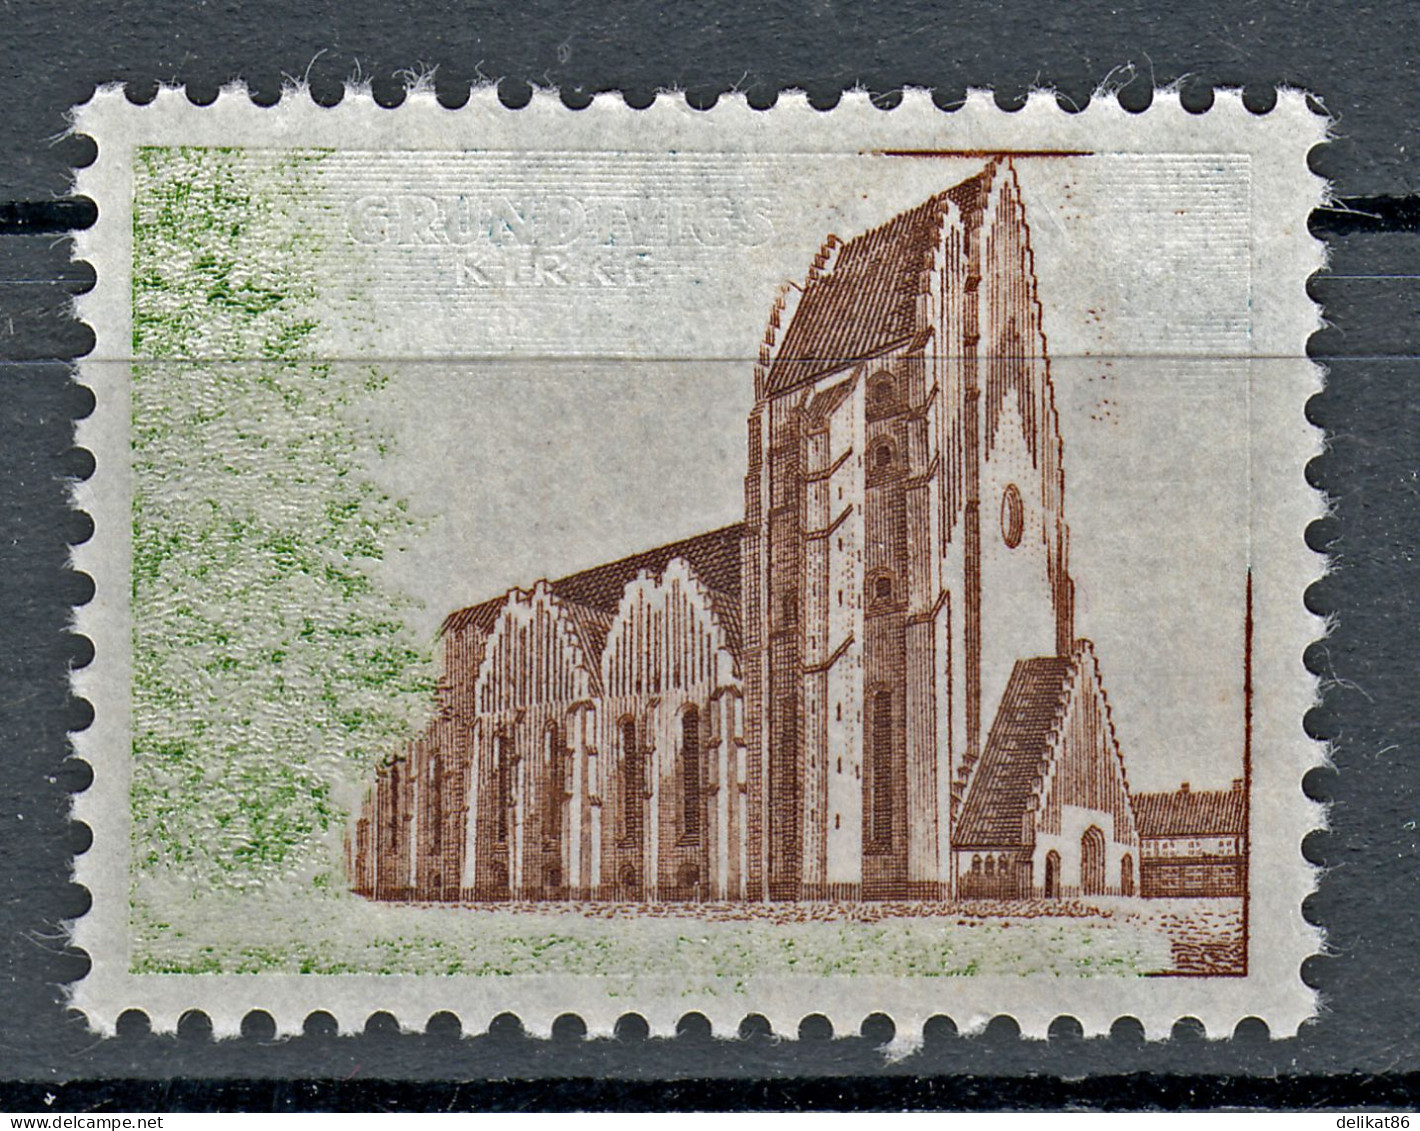 Probedruck Test Stamp Specimen Prøve Grundtvig Kirke Slania 1968 - Essais & Réimpressions